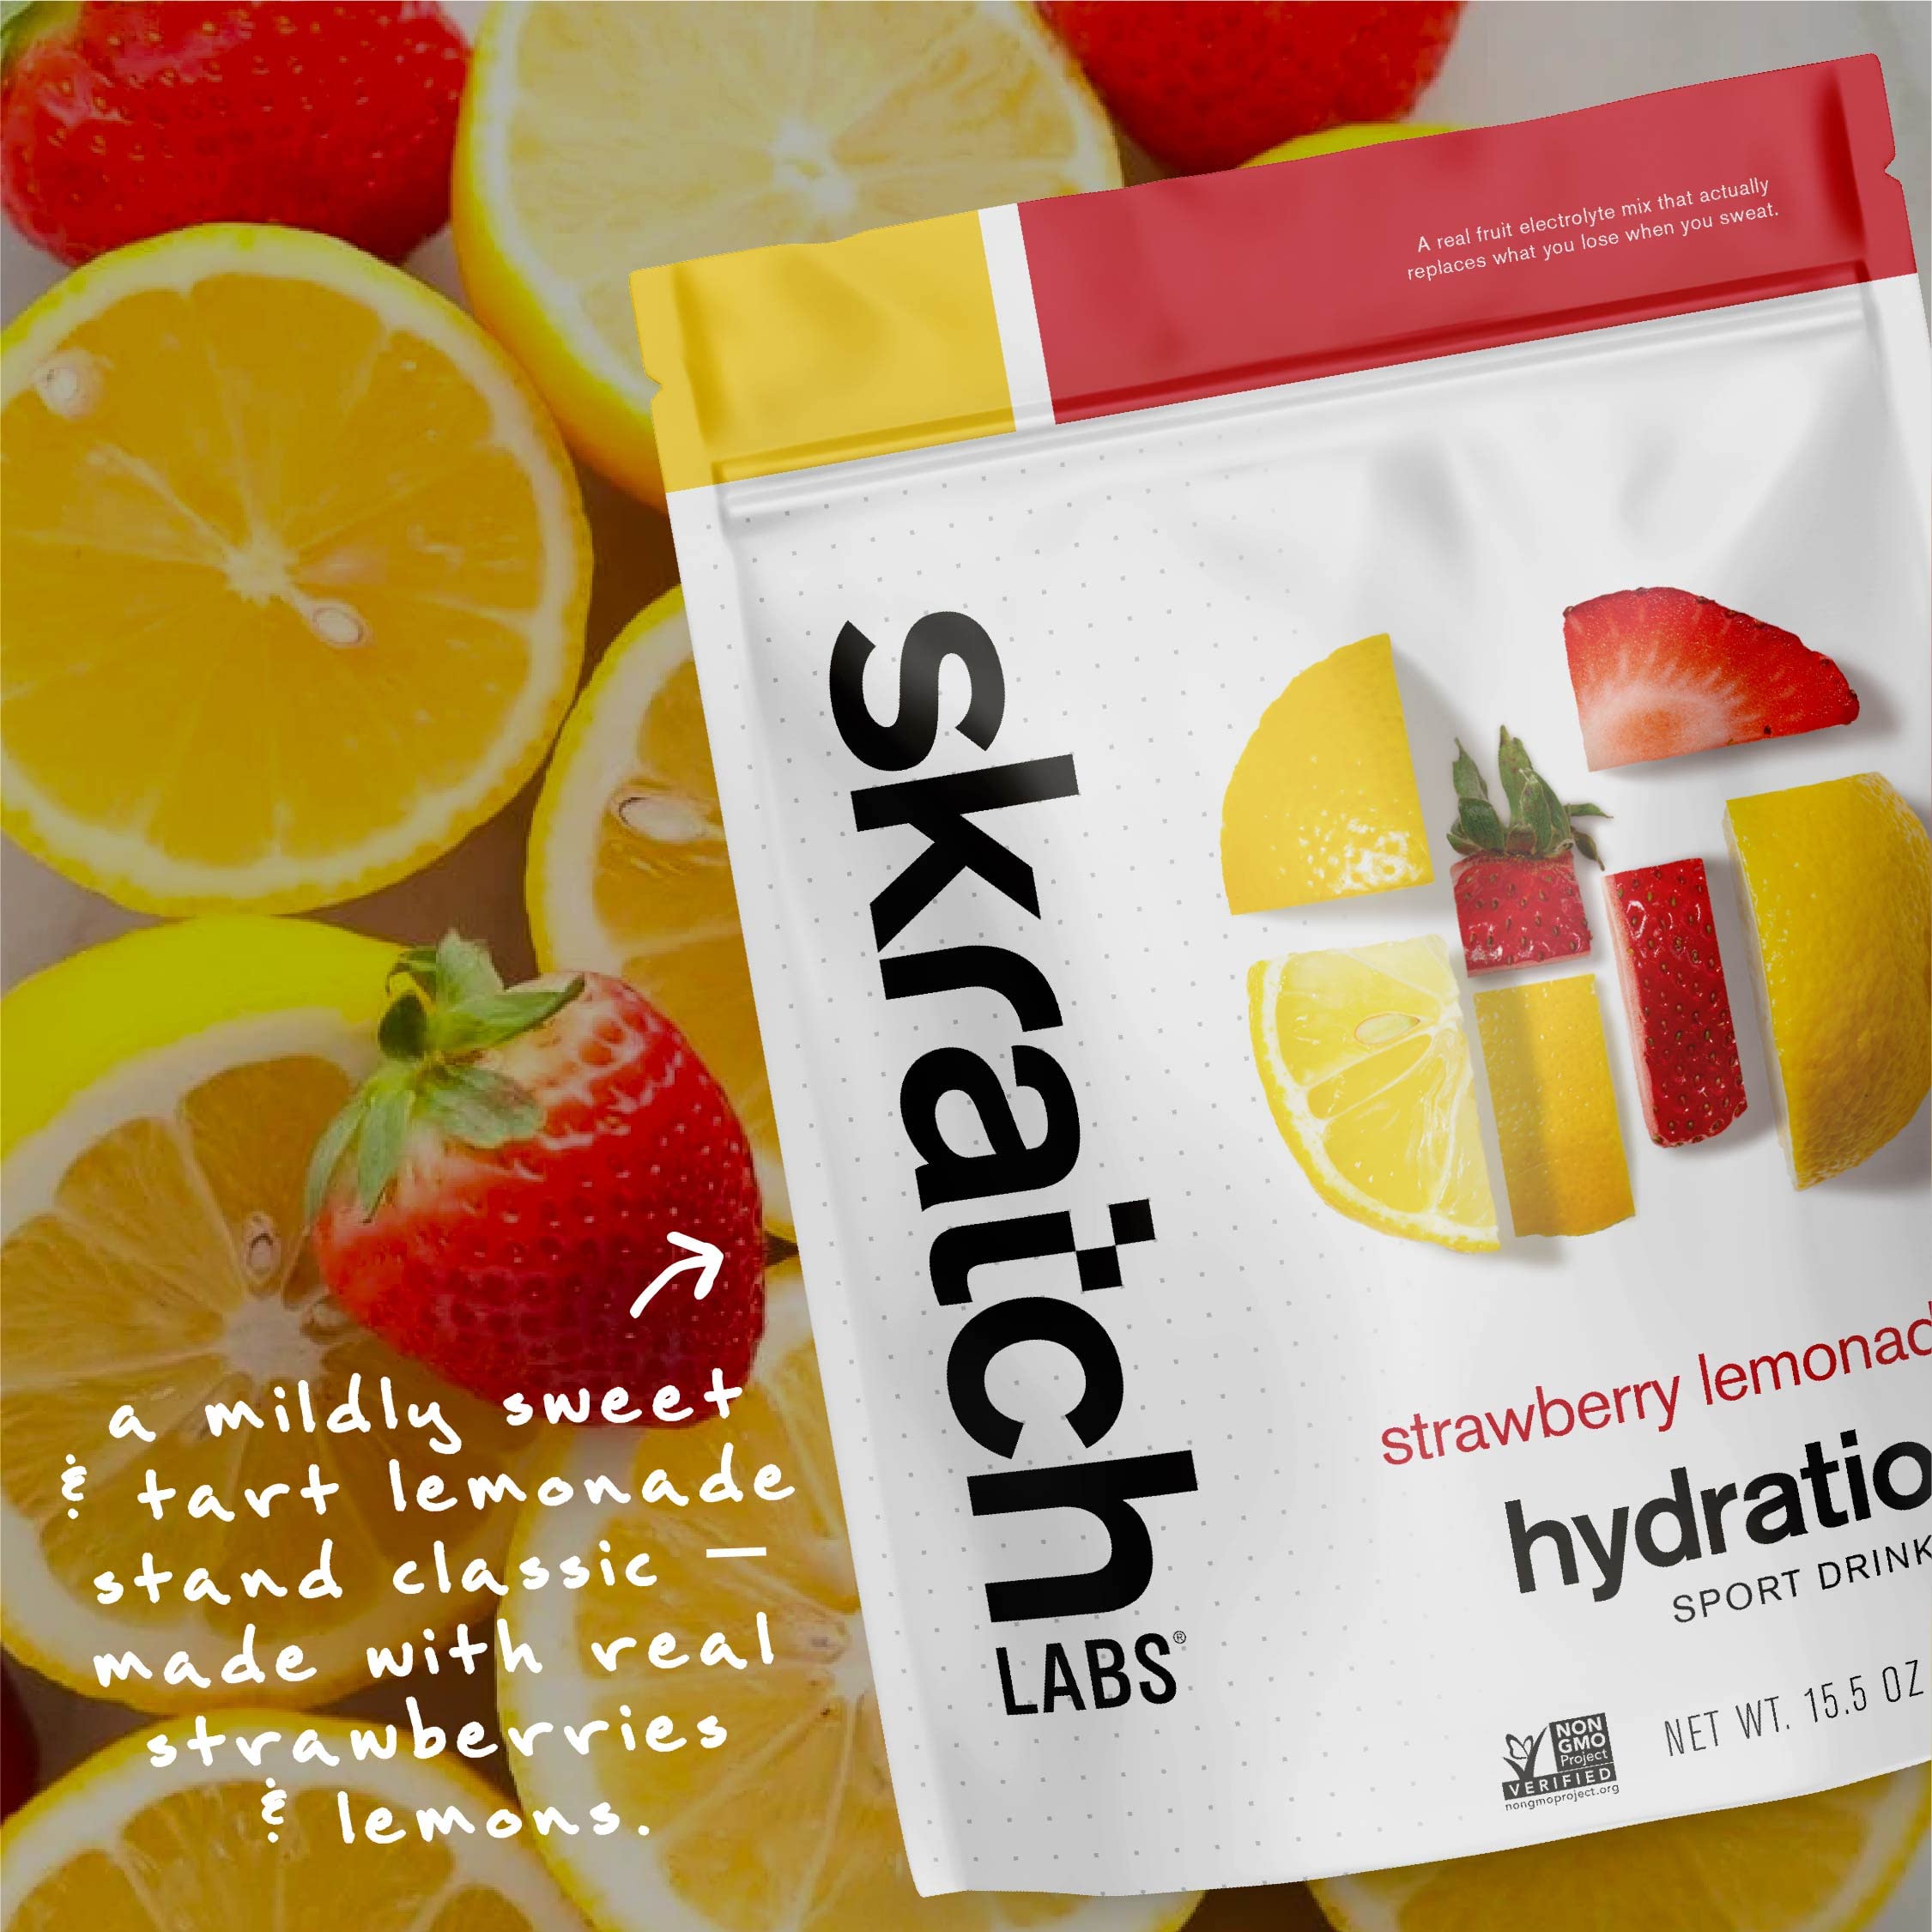 Skratch Labs Hydration Powder | Sport Drink Mix | Electrolytes Powder for Exercise, Endurance, and Performance | Strawberry Lemonade | 20 Servings | Non-GMO, Vegan, Kosher